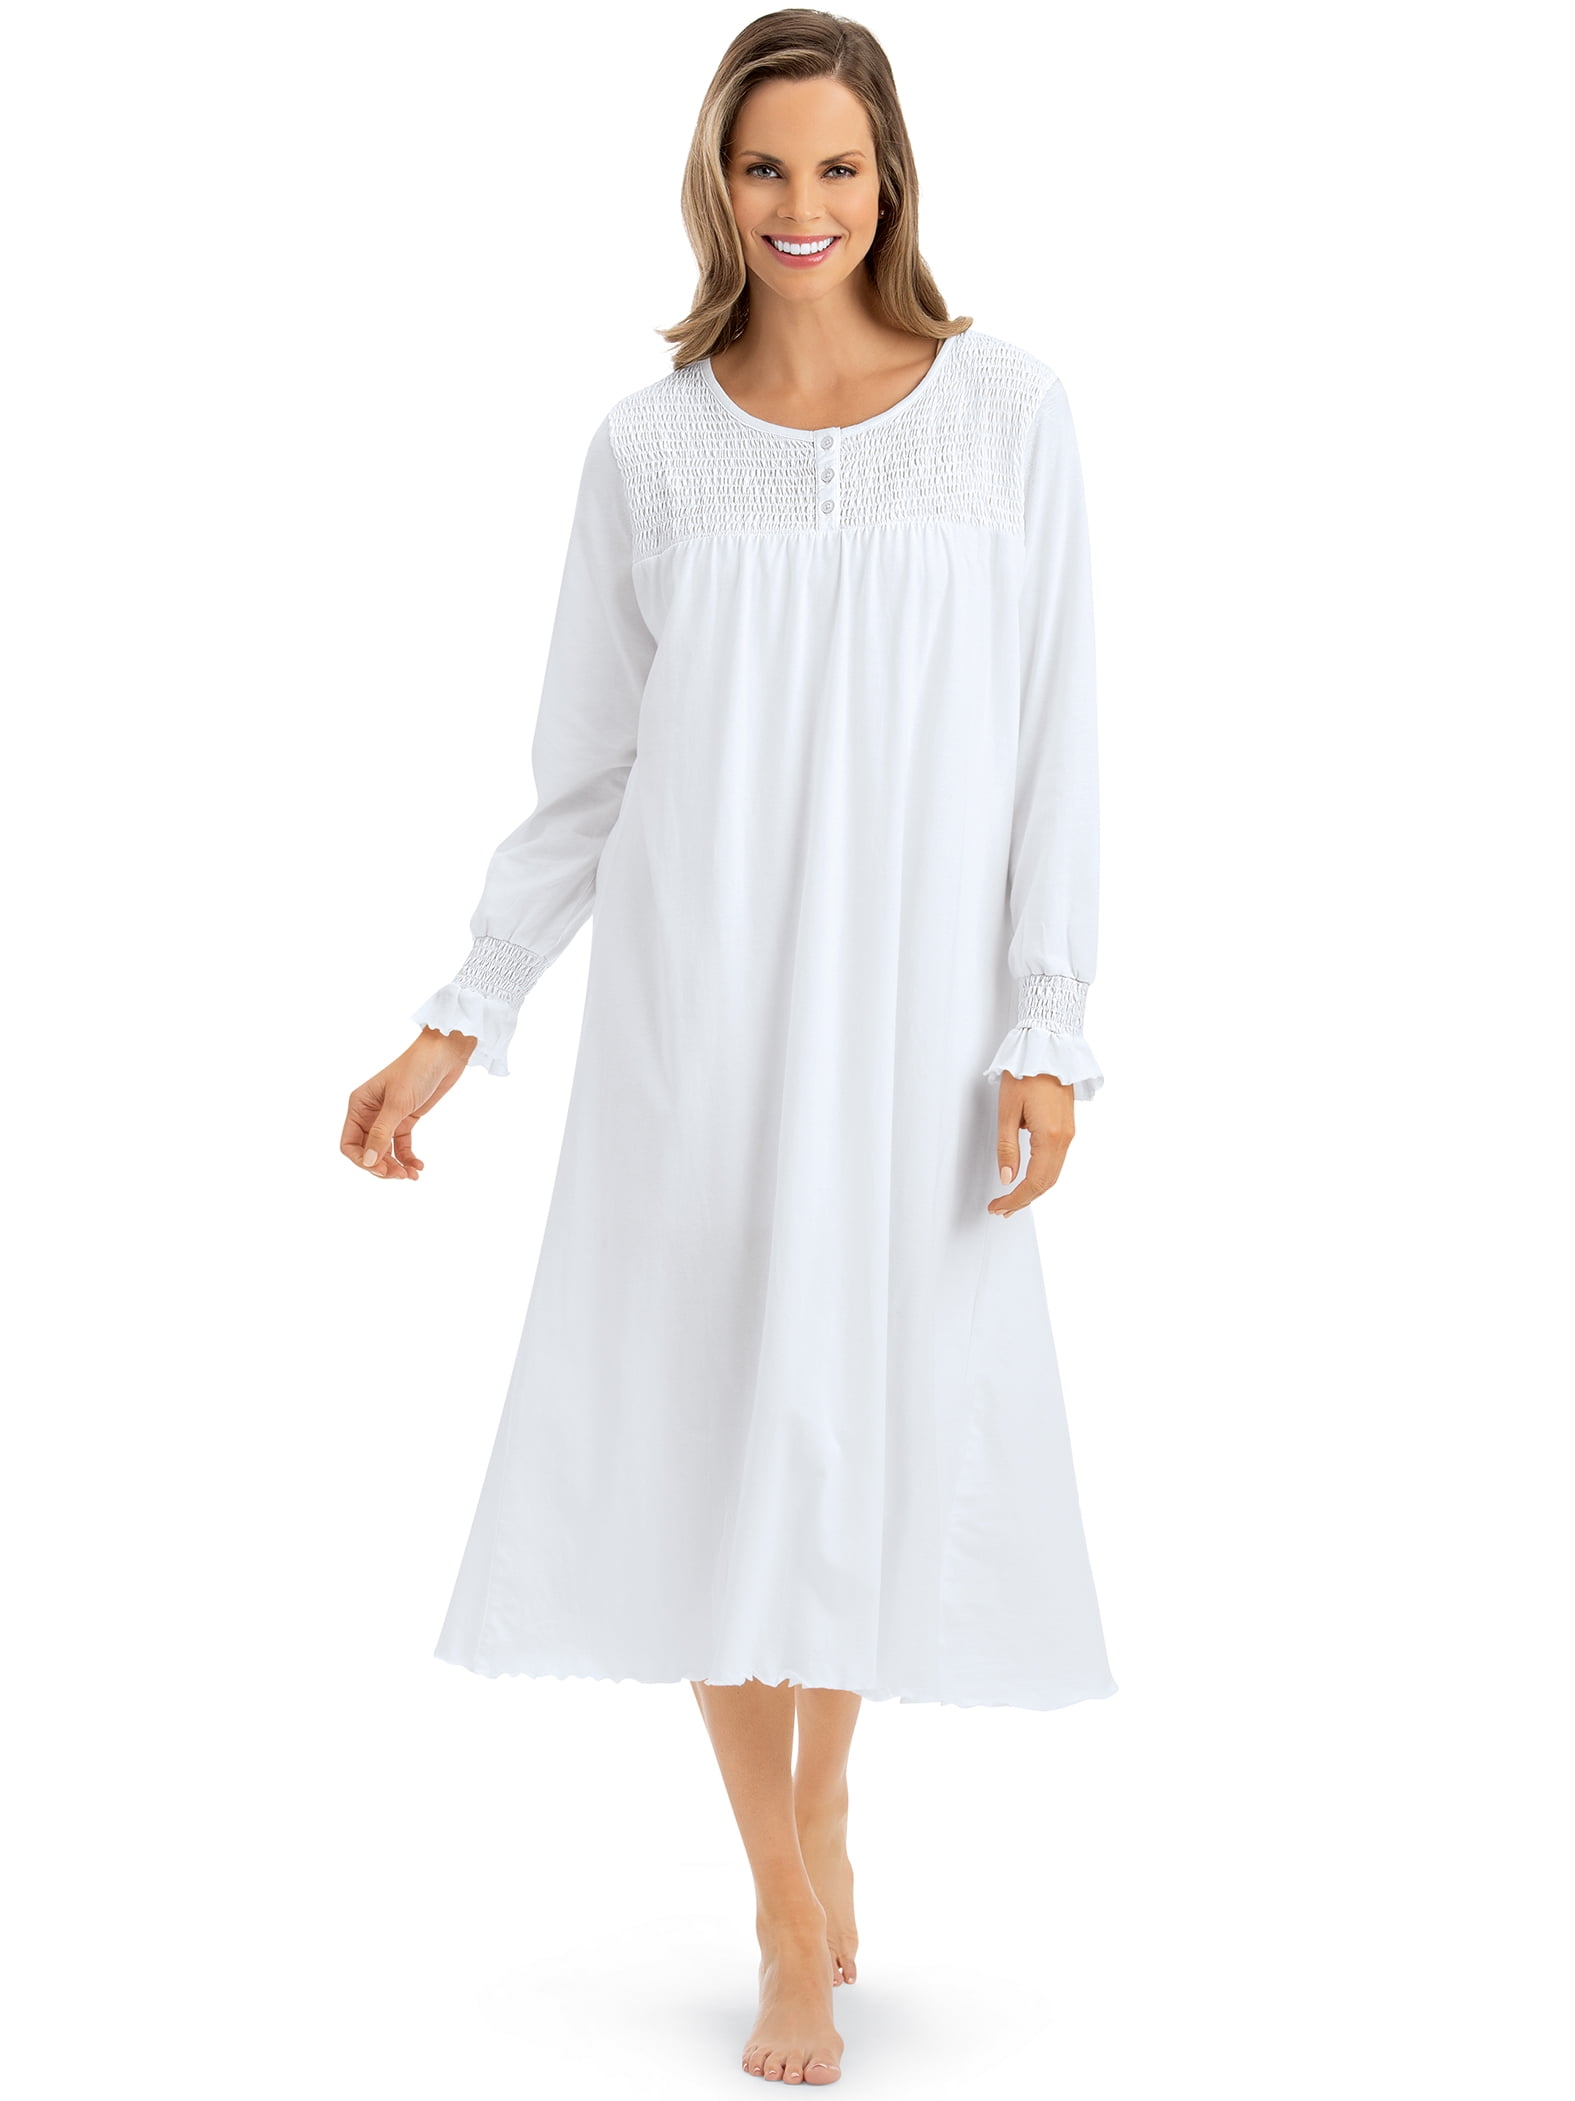 Elegant Long Sleeve Smocked Cotton Knit Nightgown